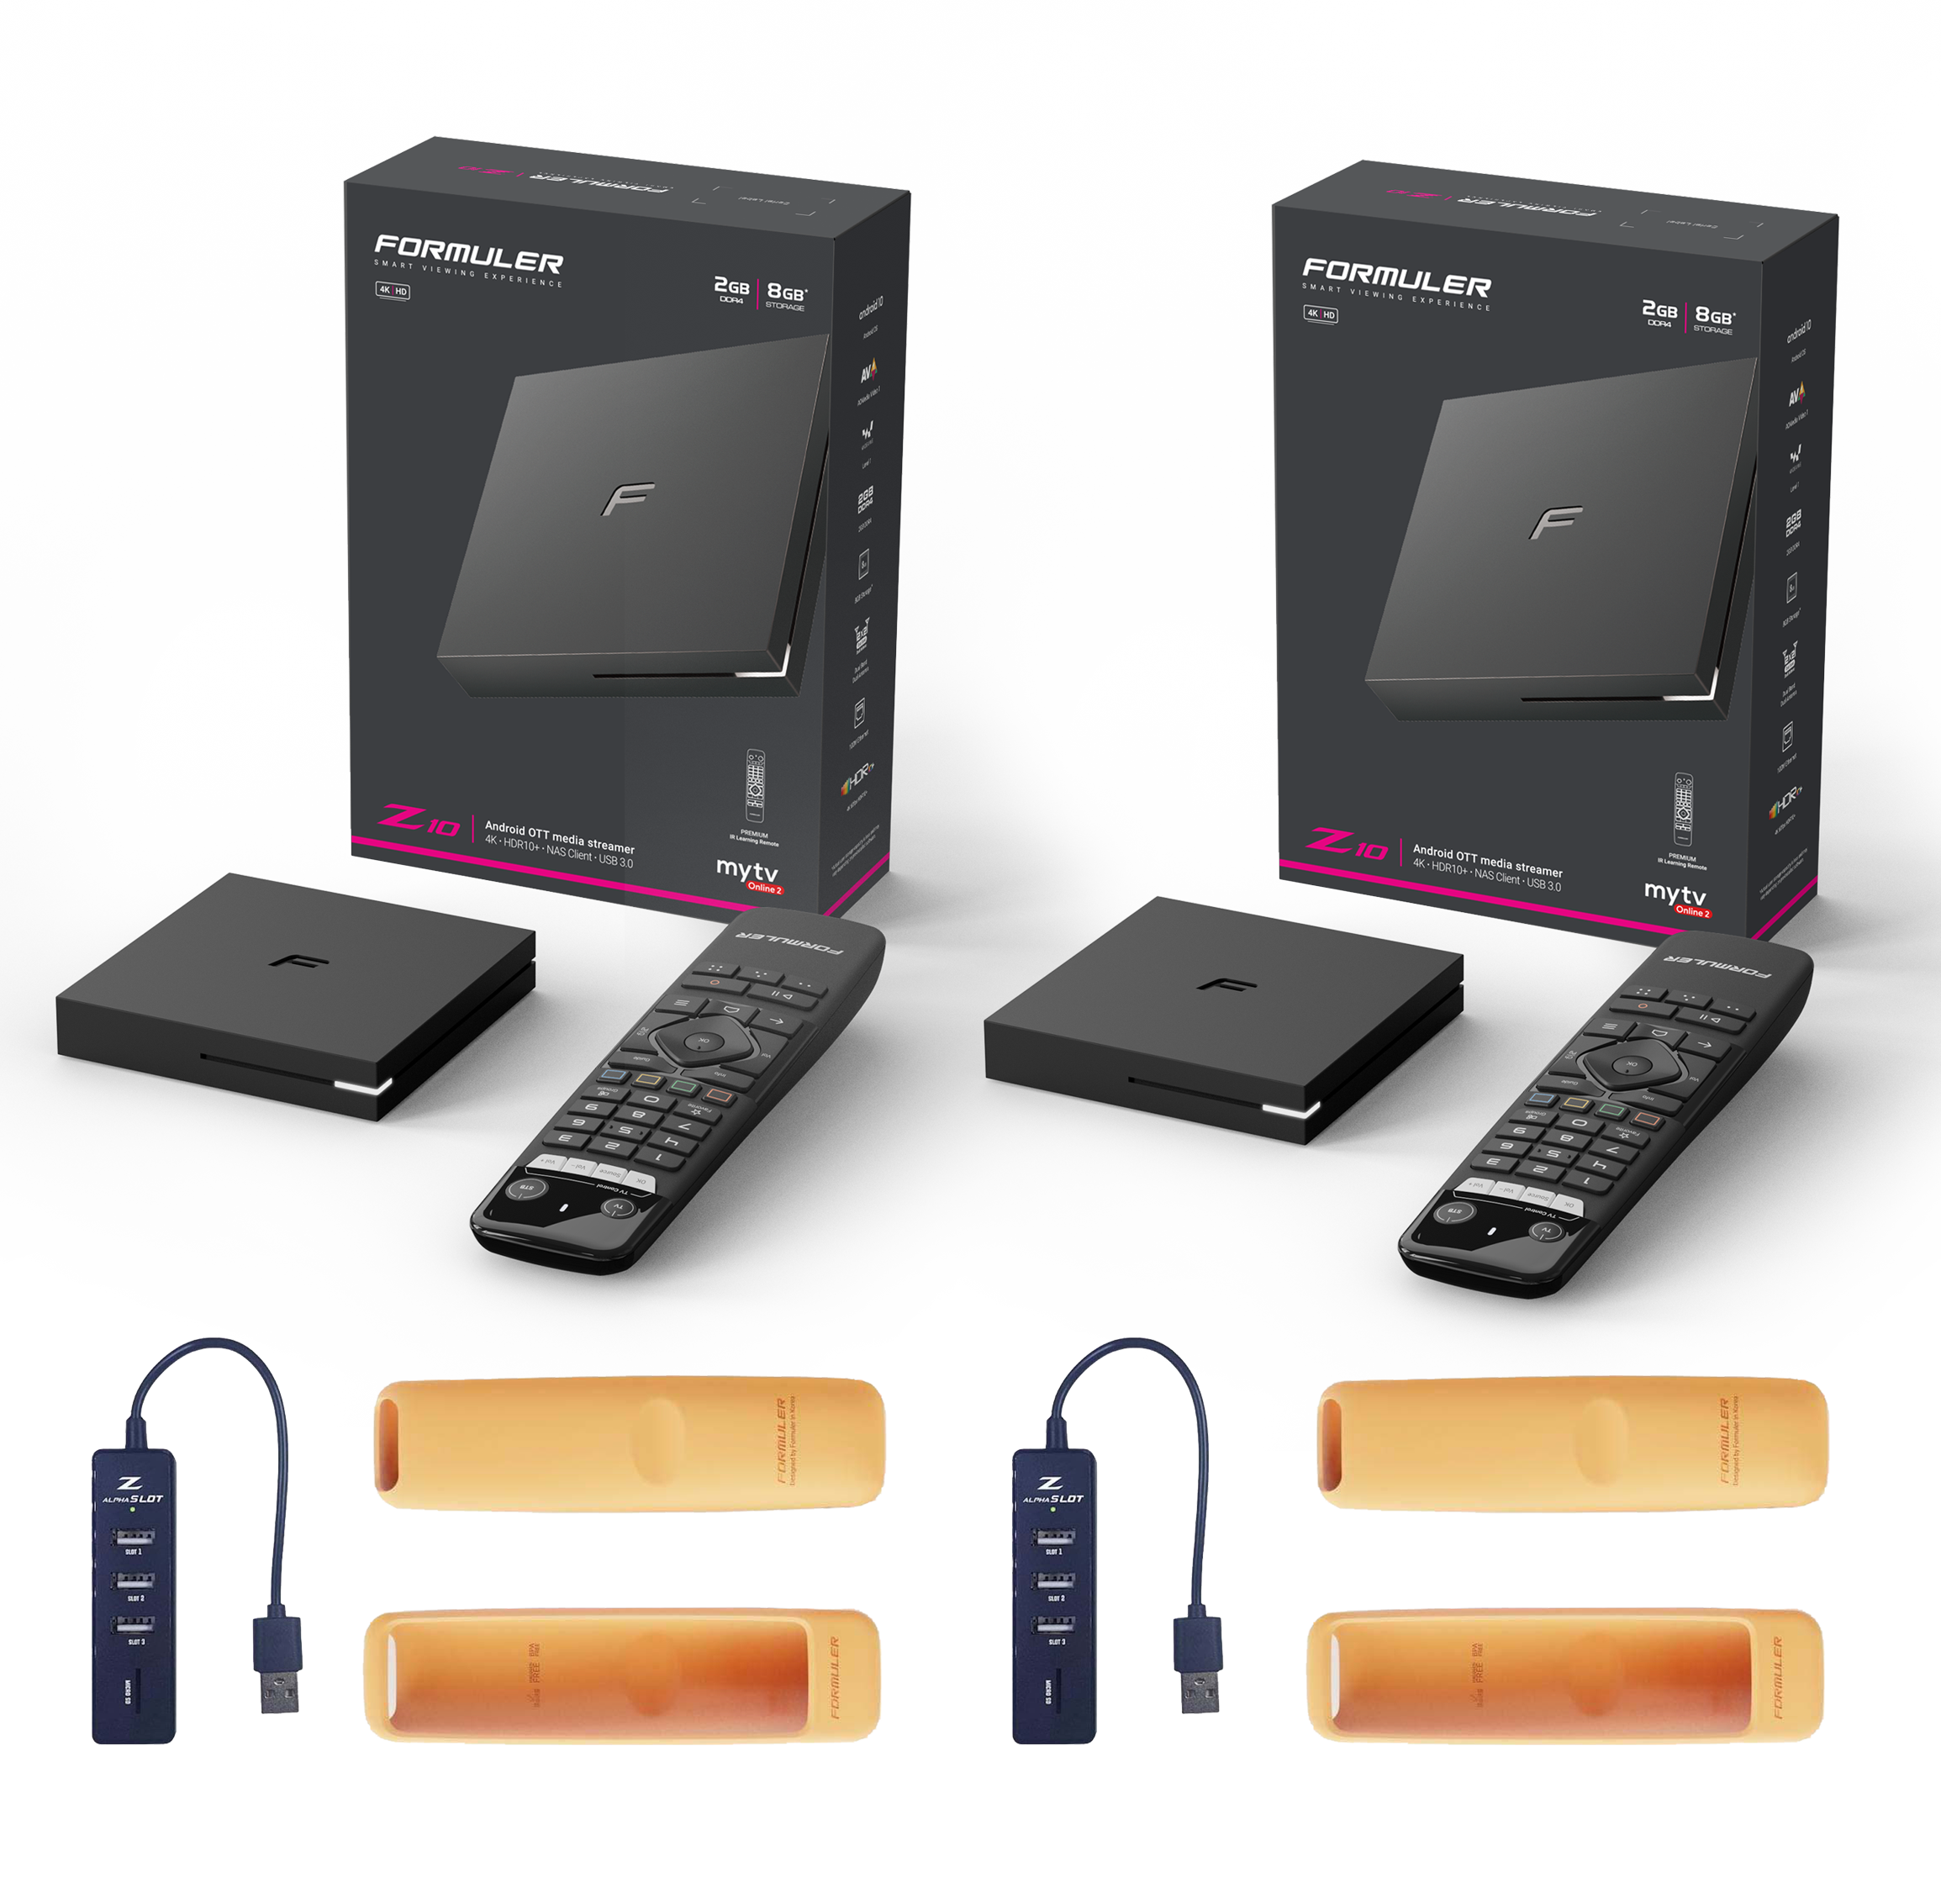 Duo Pack - 2 x Formuler Z10 + FREE ACCESSORIES: 2 x Orange Remote cover + 2 x USB Hub